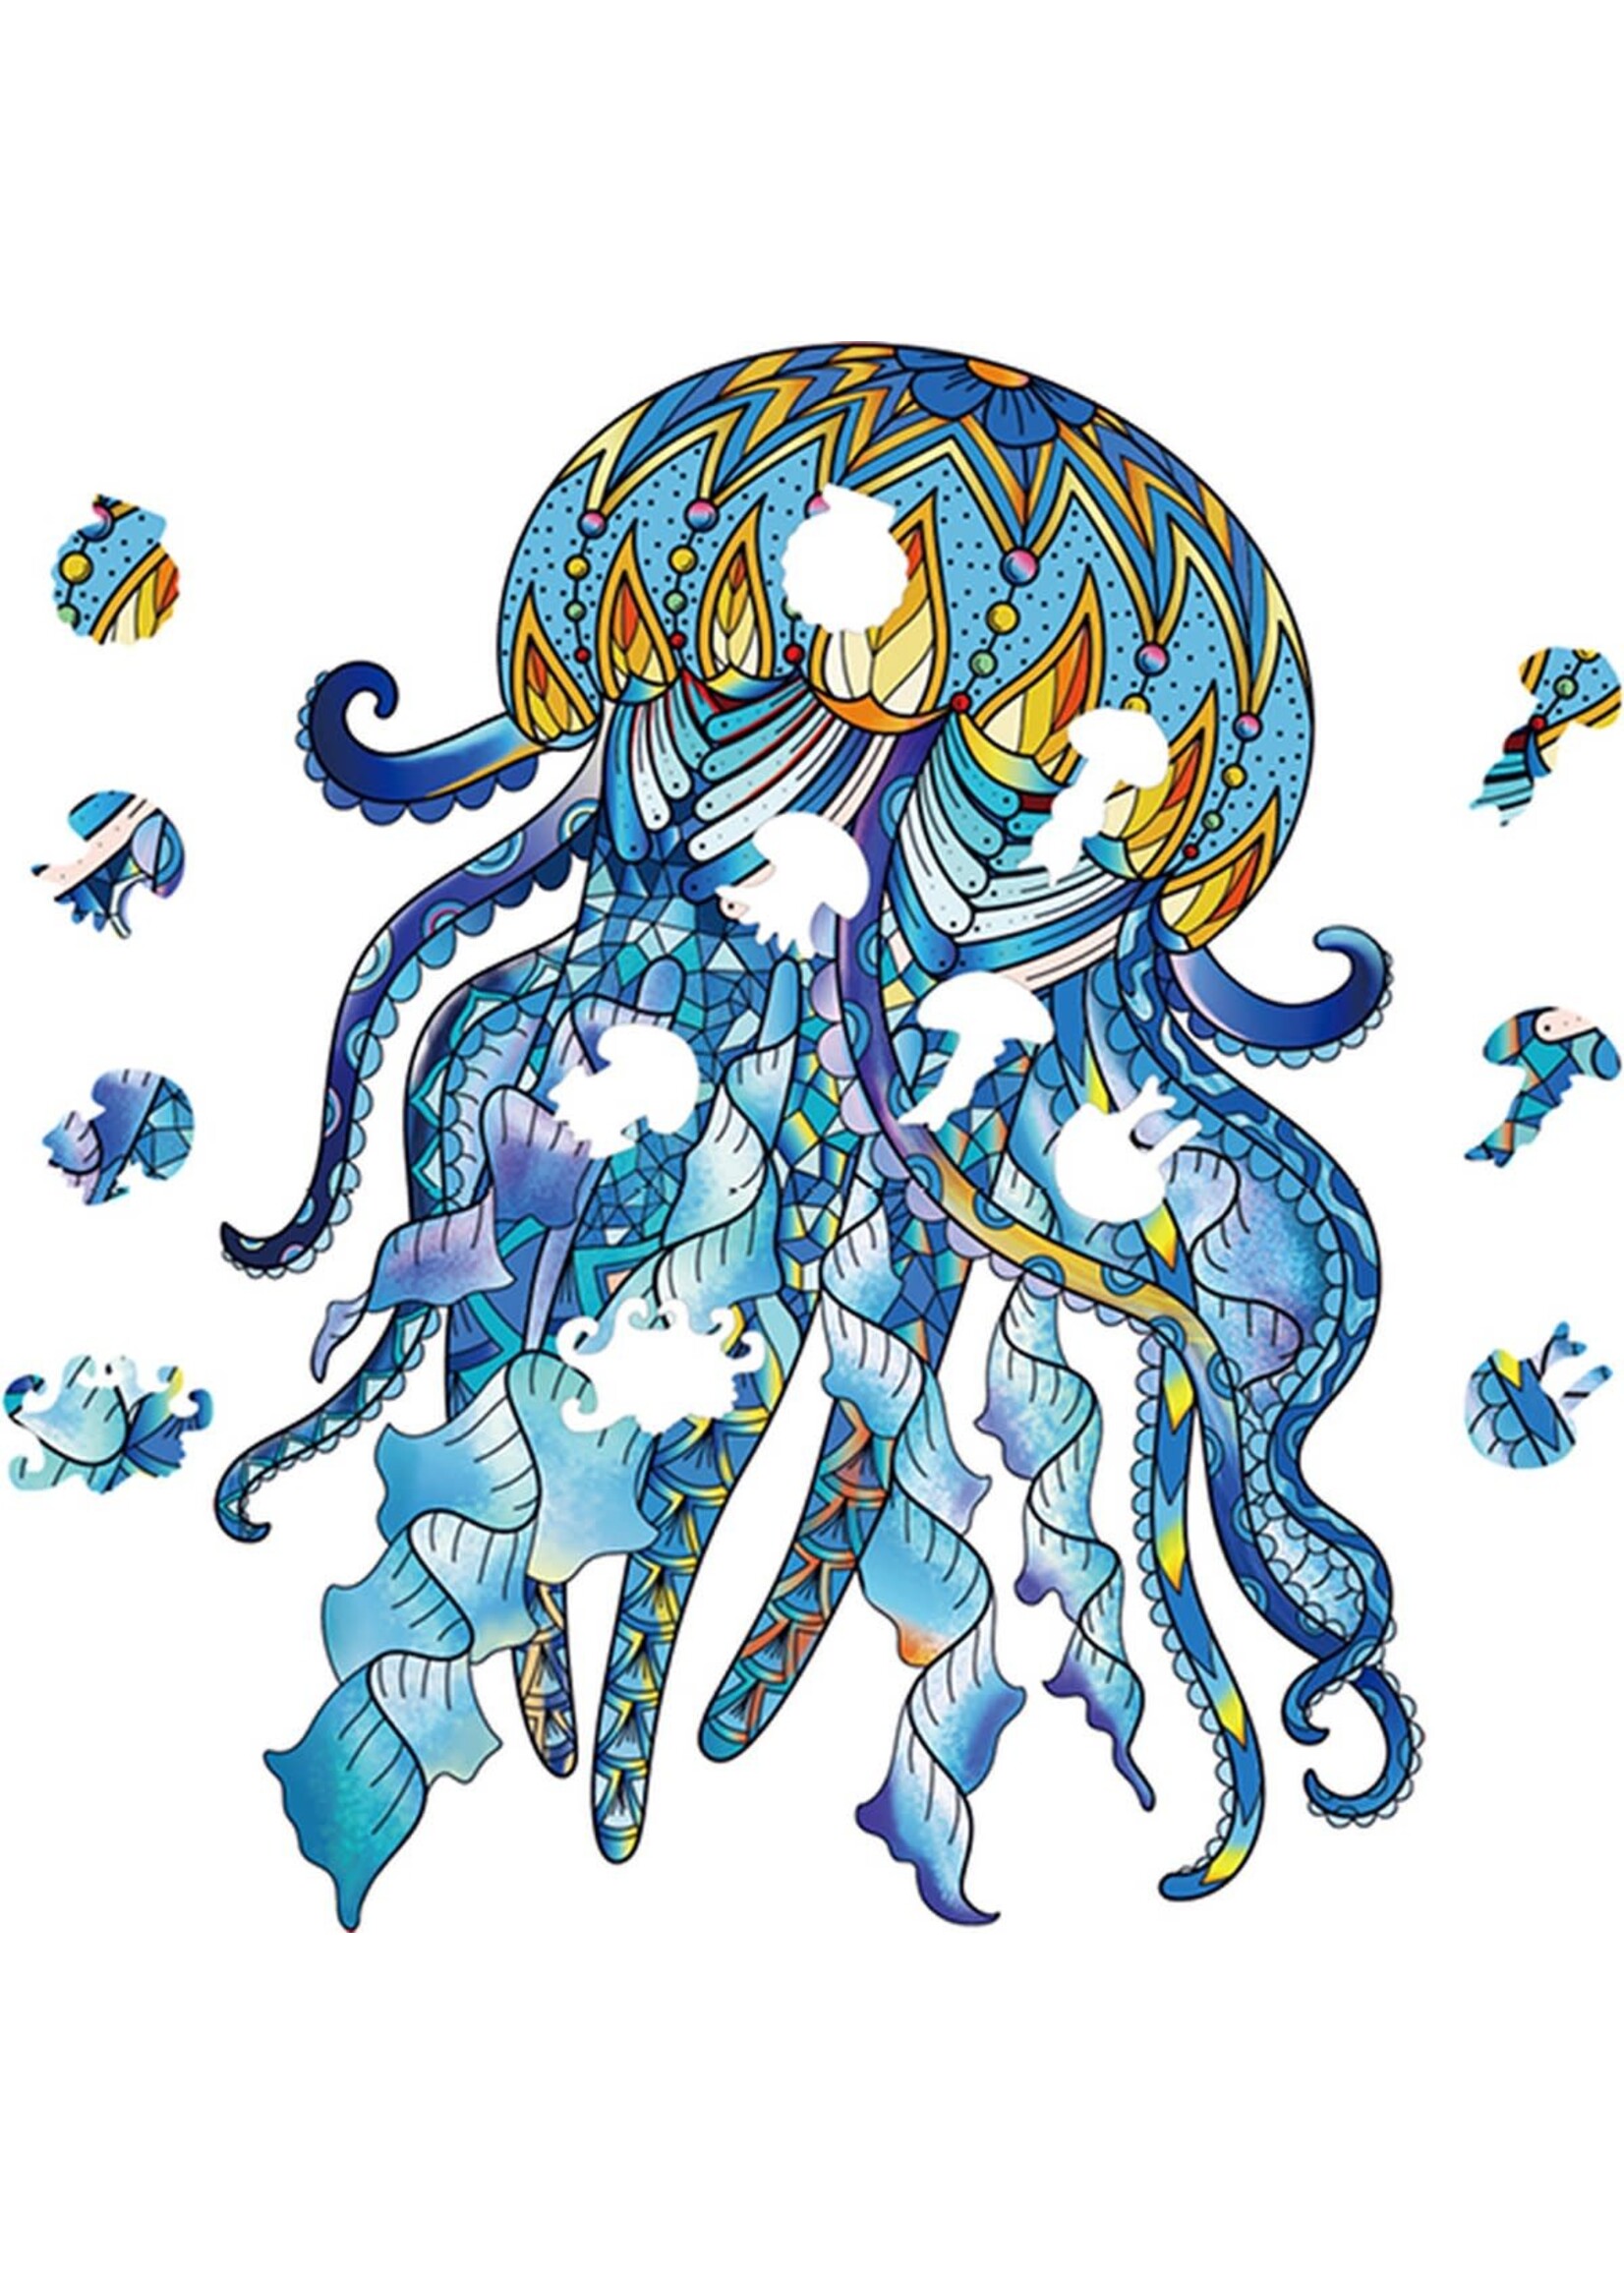 Eureka! Eureka 2D RainboWooden Puzzle Jellyfish 106 st